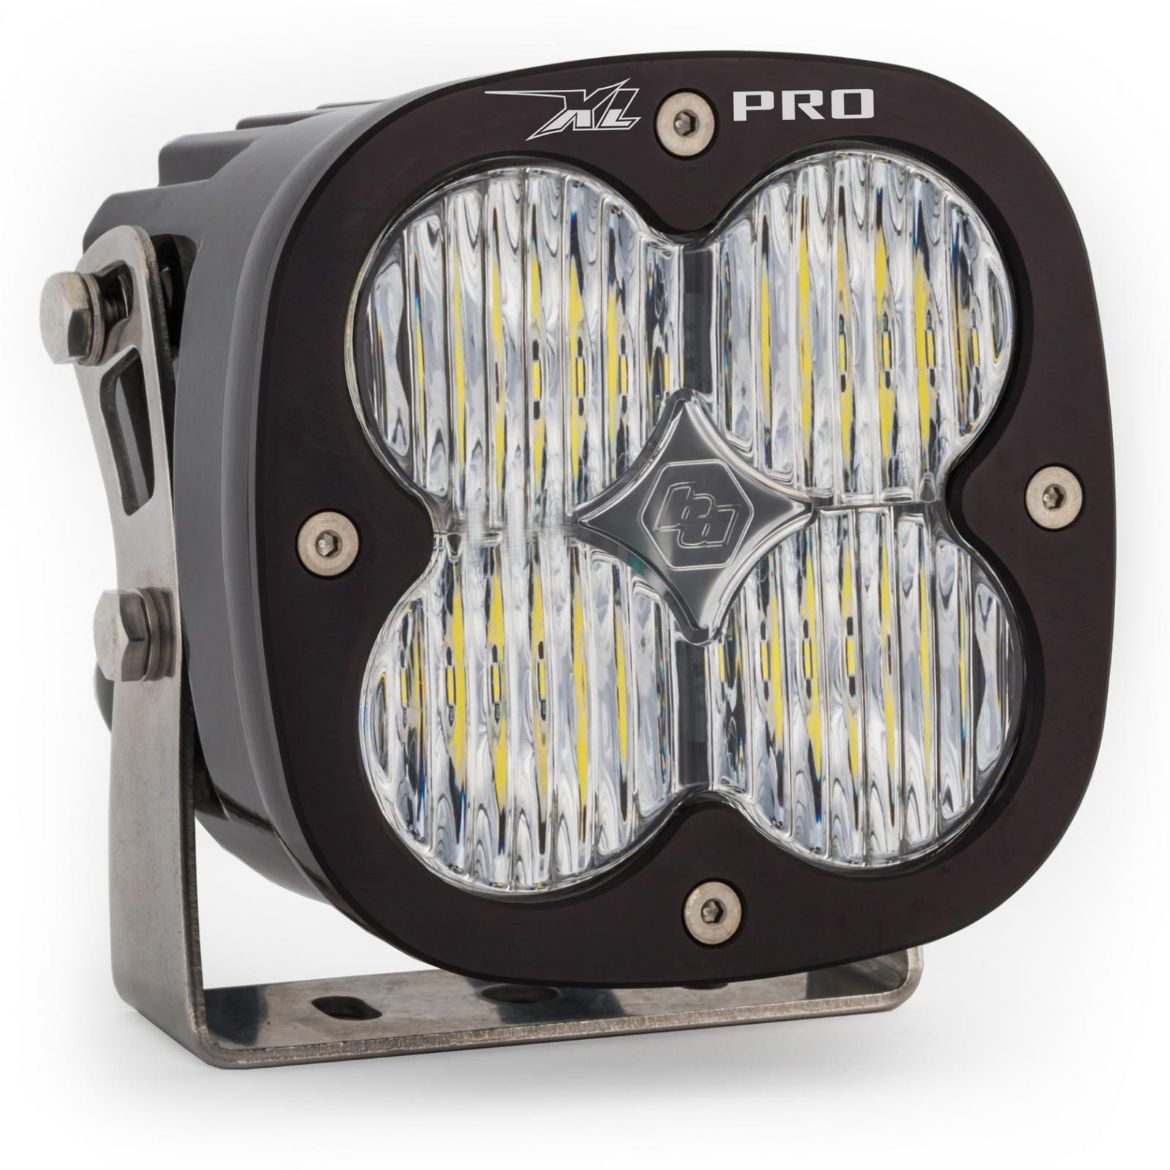 Picture of LED Light Pods Clear Lens Spot Pair XL Pro Baja Designs